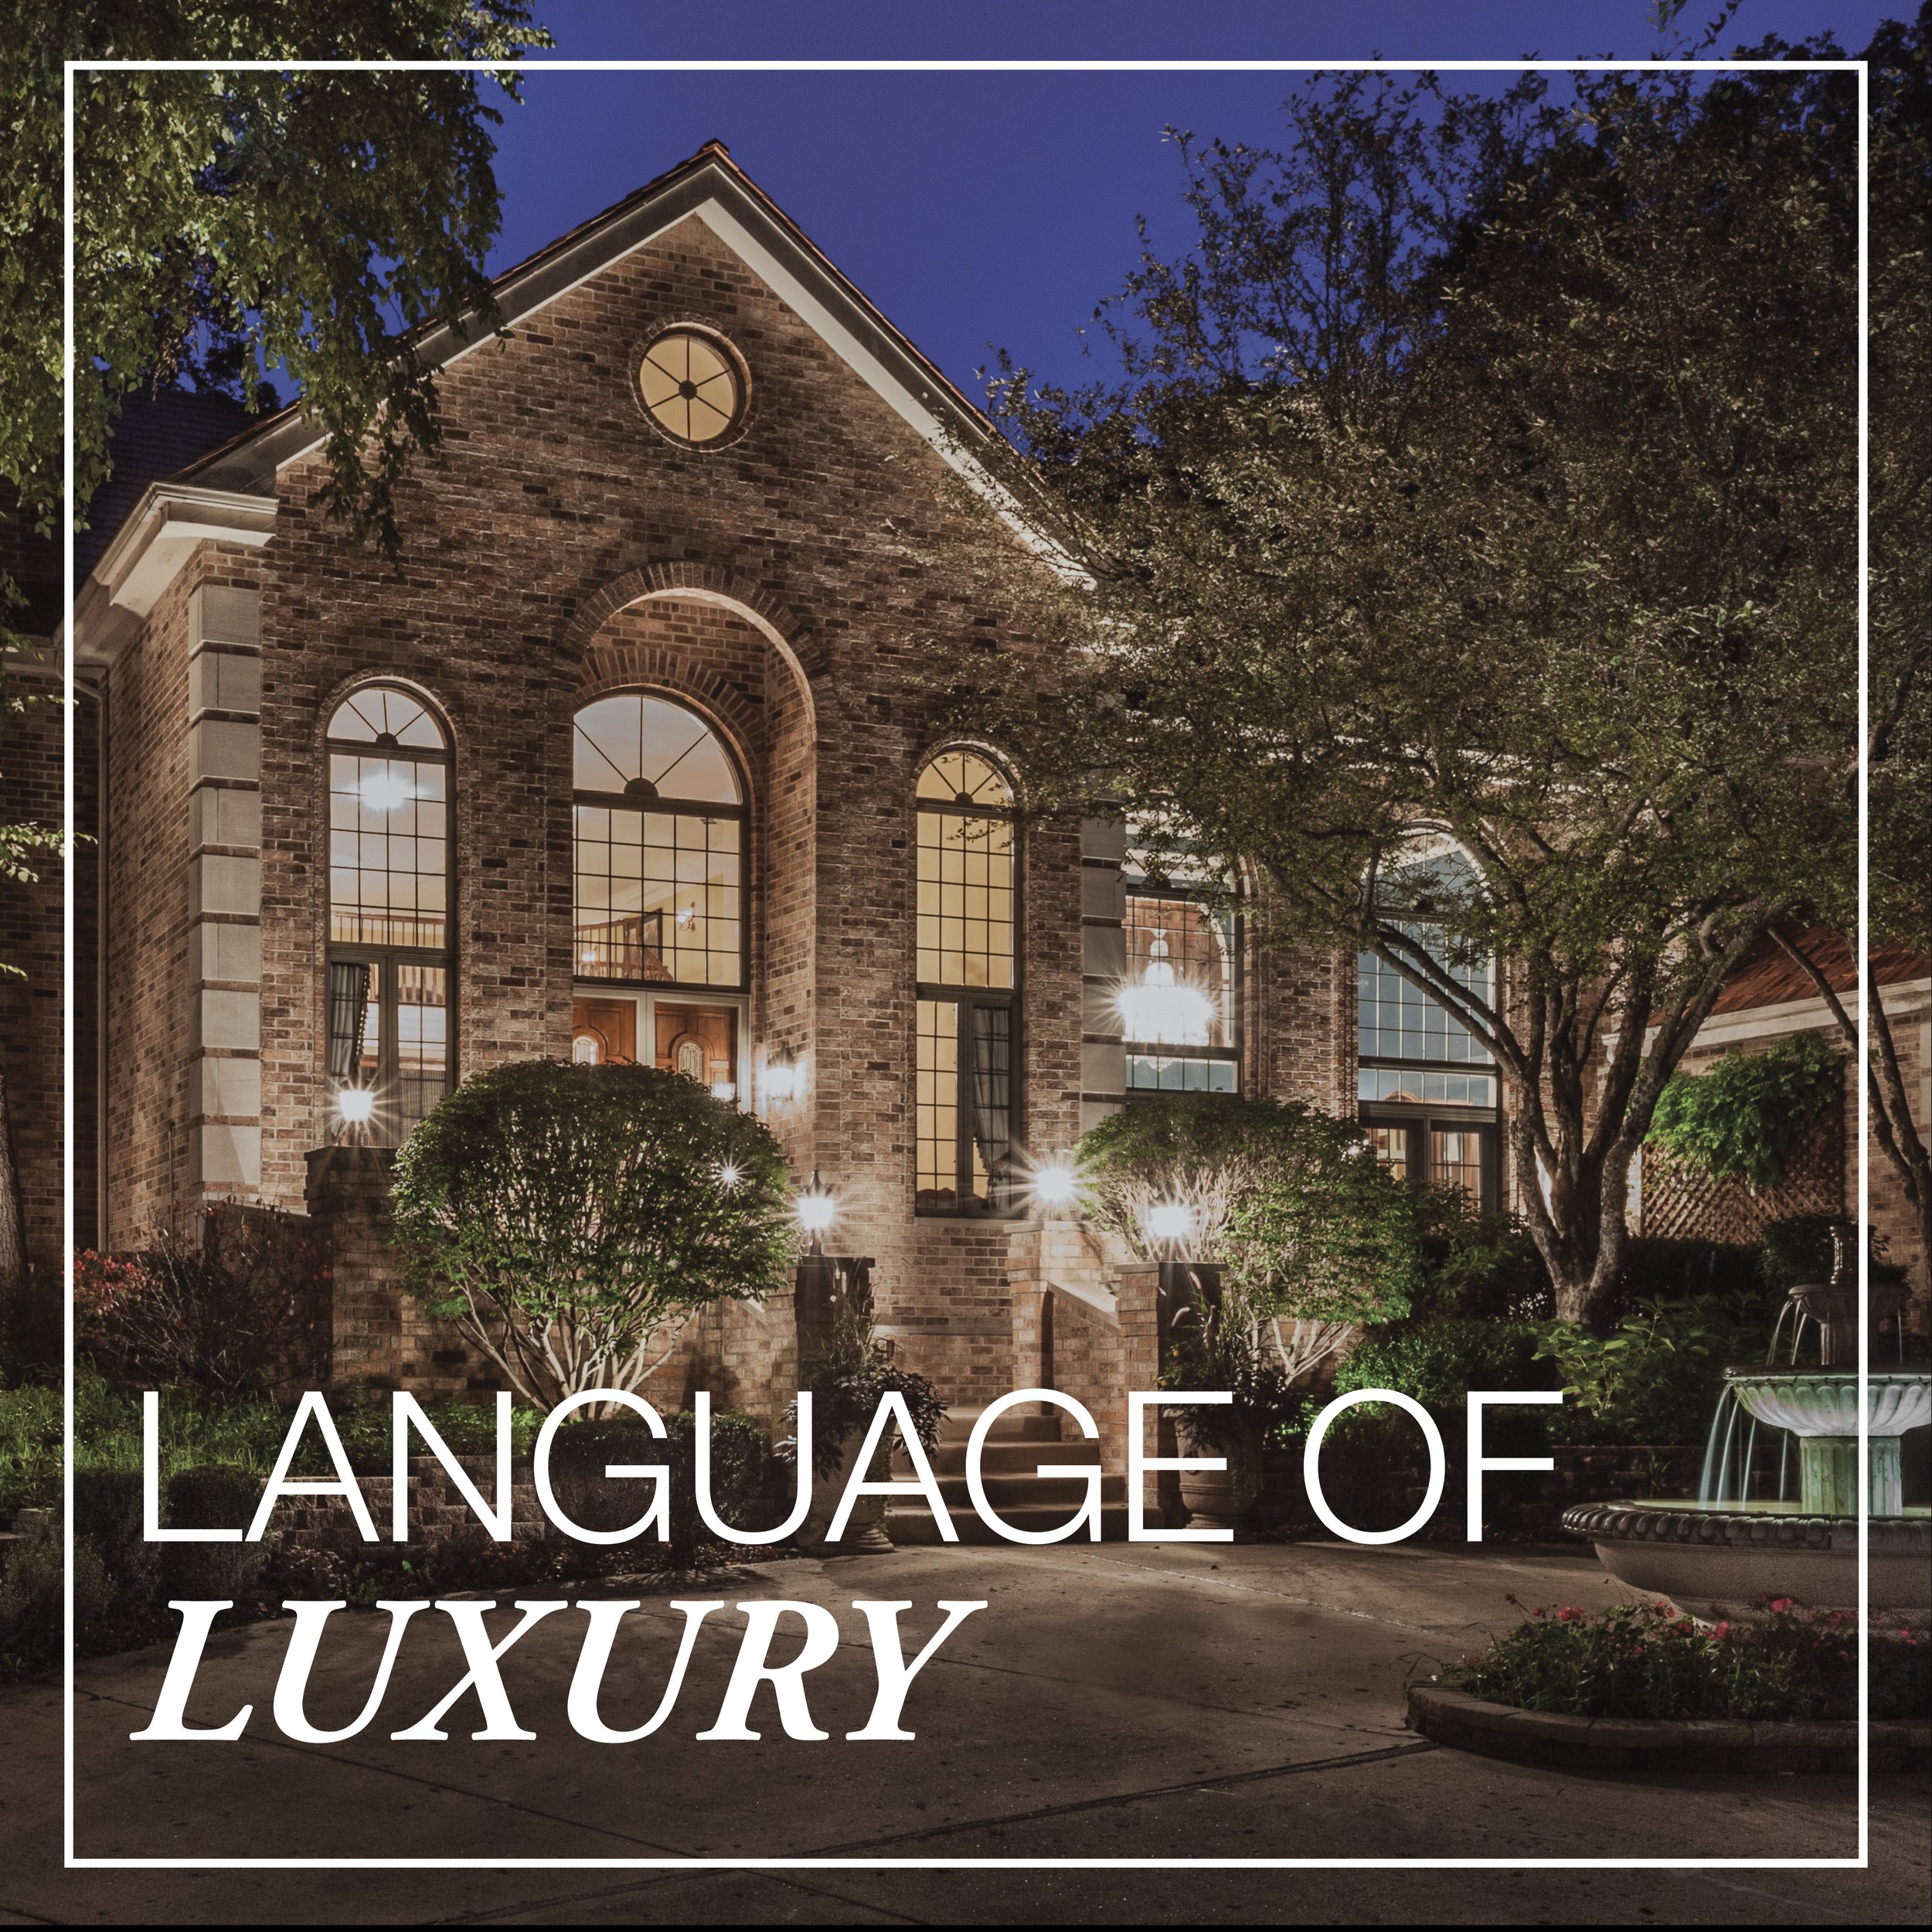 The Language of Luxury